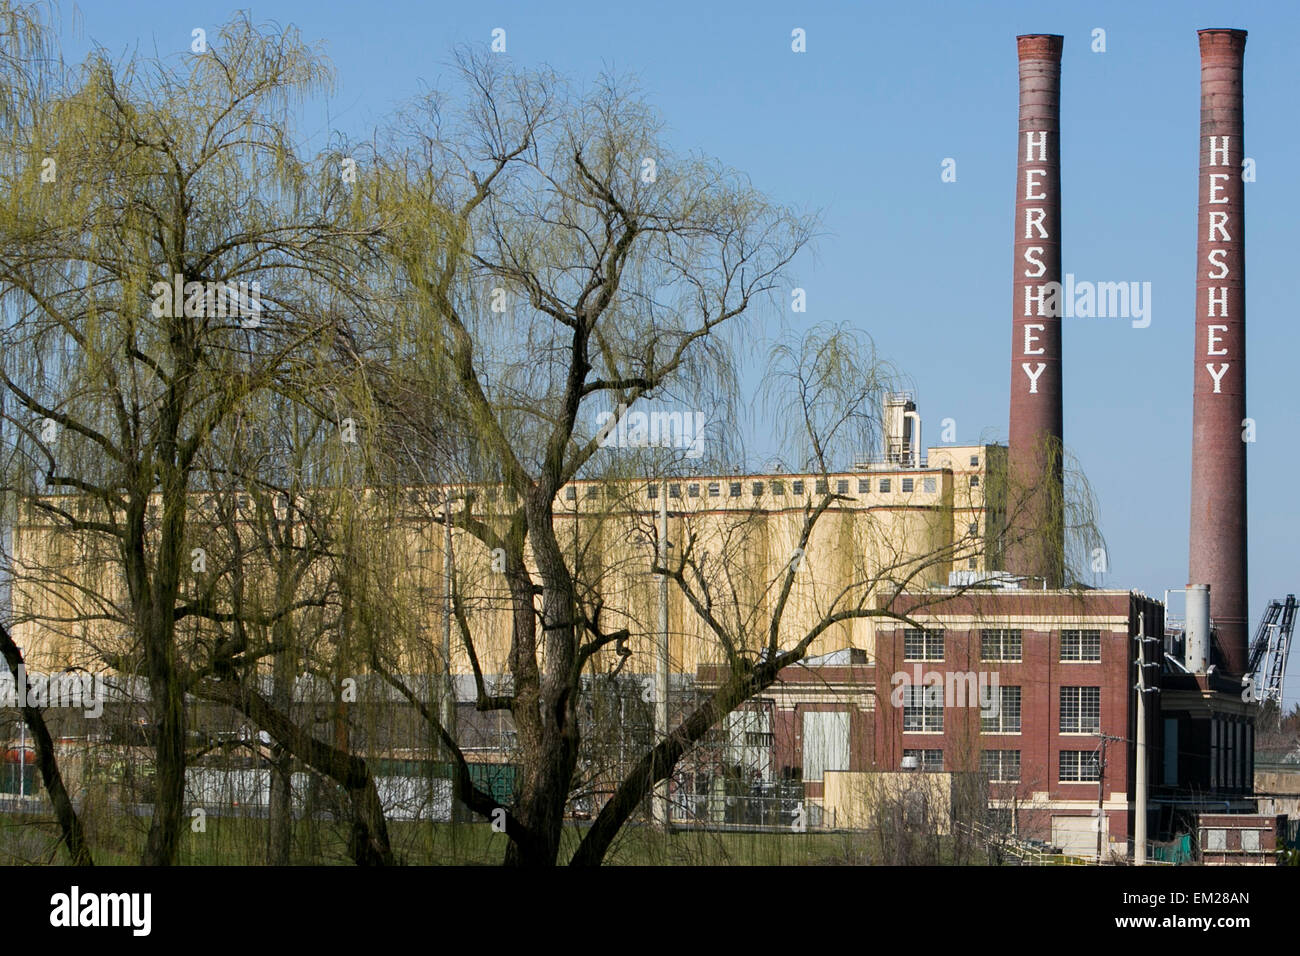 Una vista dell'originale Hershey Chocolate Factory di Hershey, Pennsylvania. Foto Stock